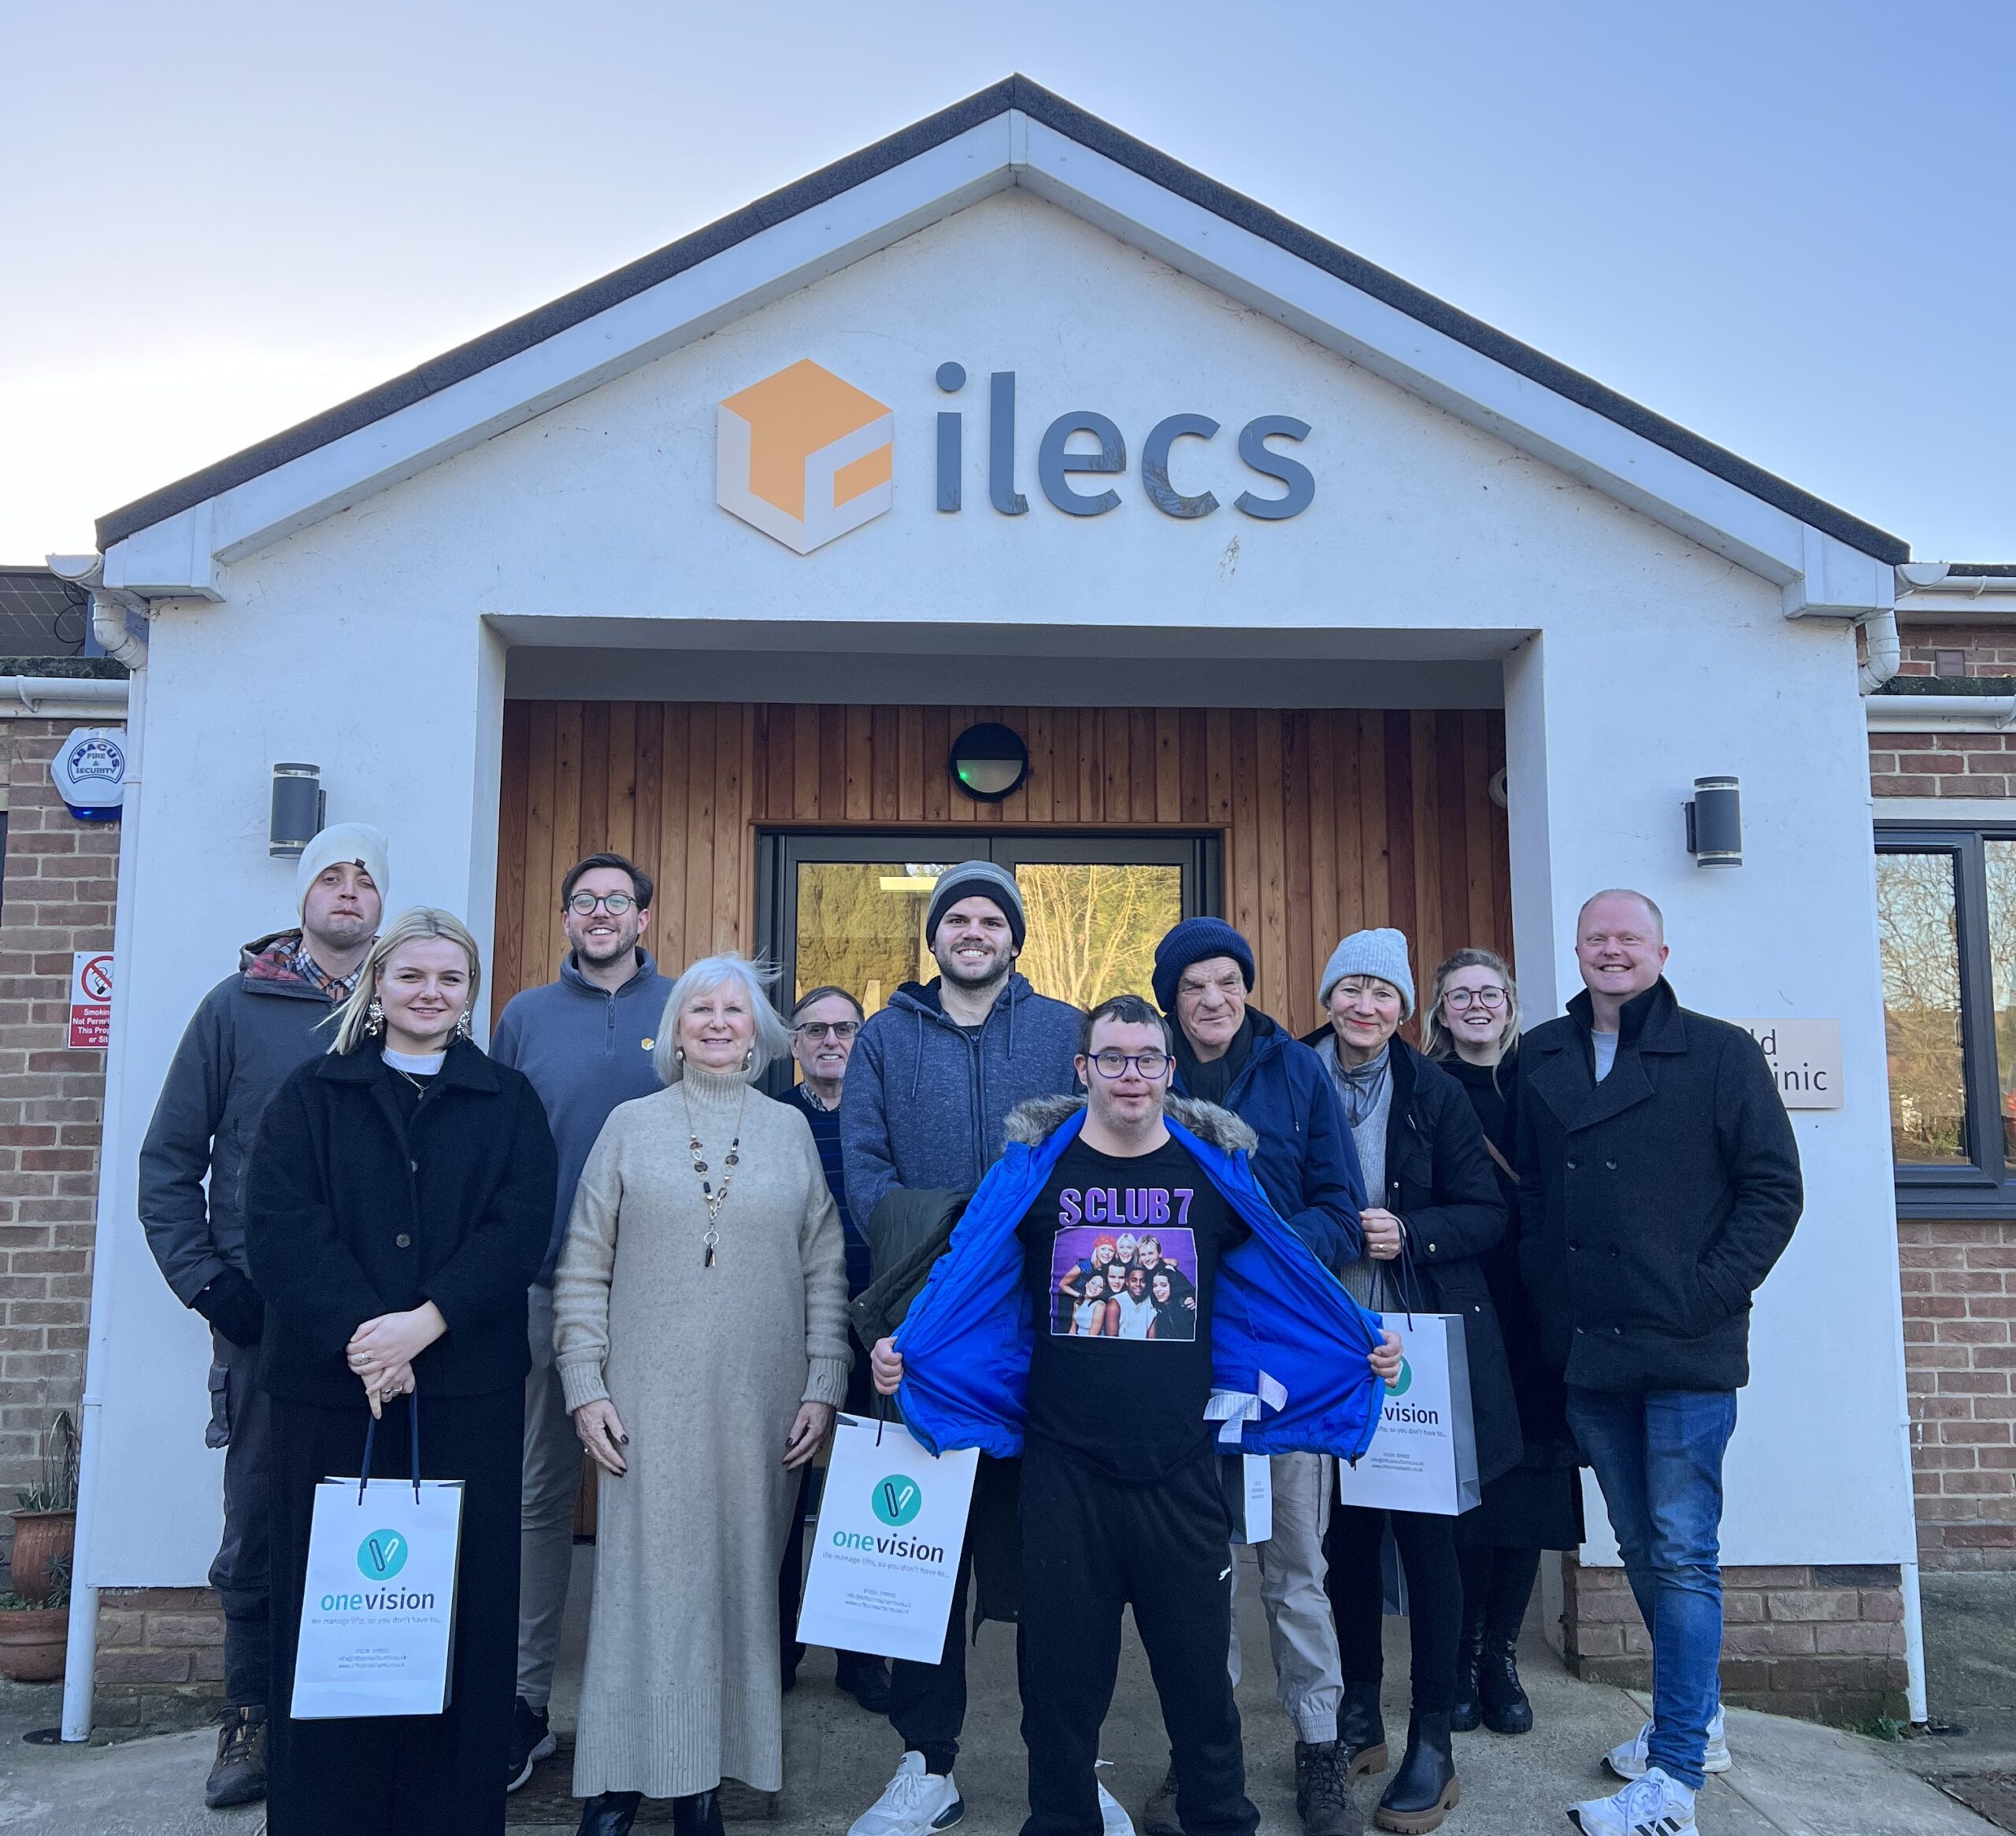 ILECS provides support to Acorn Village